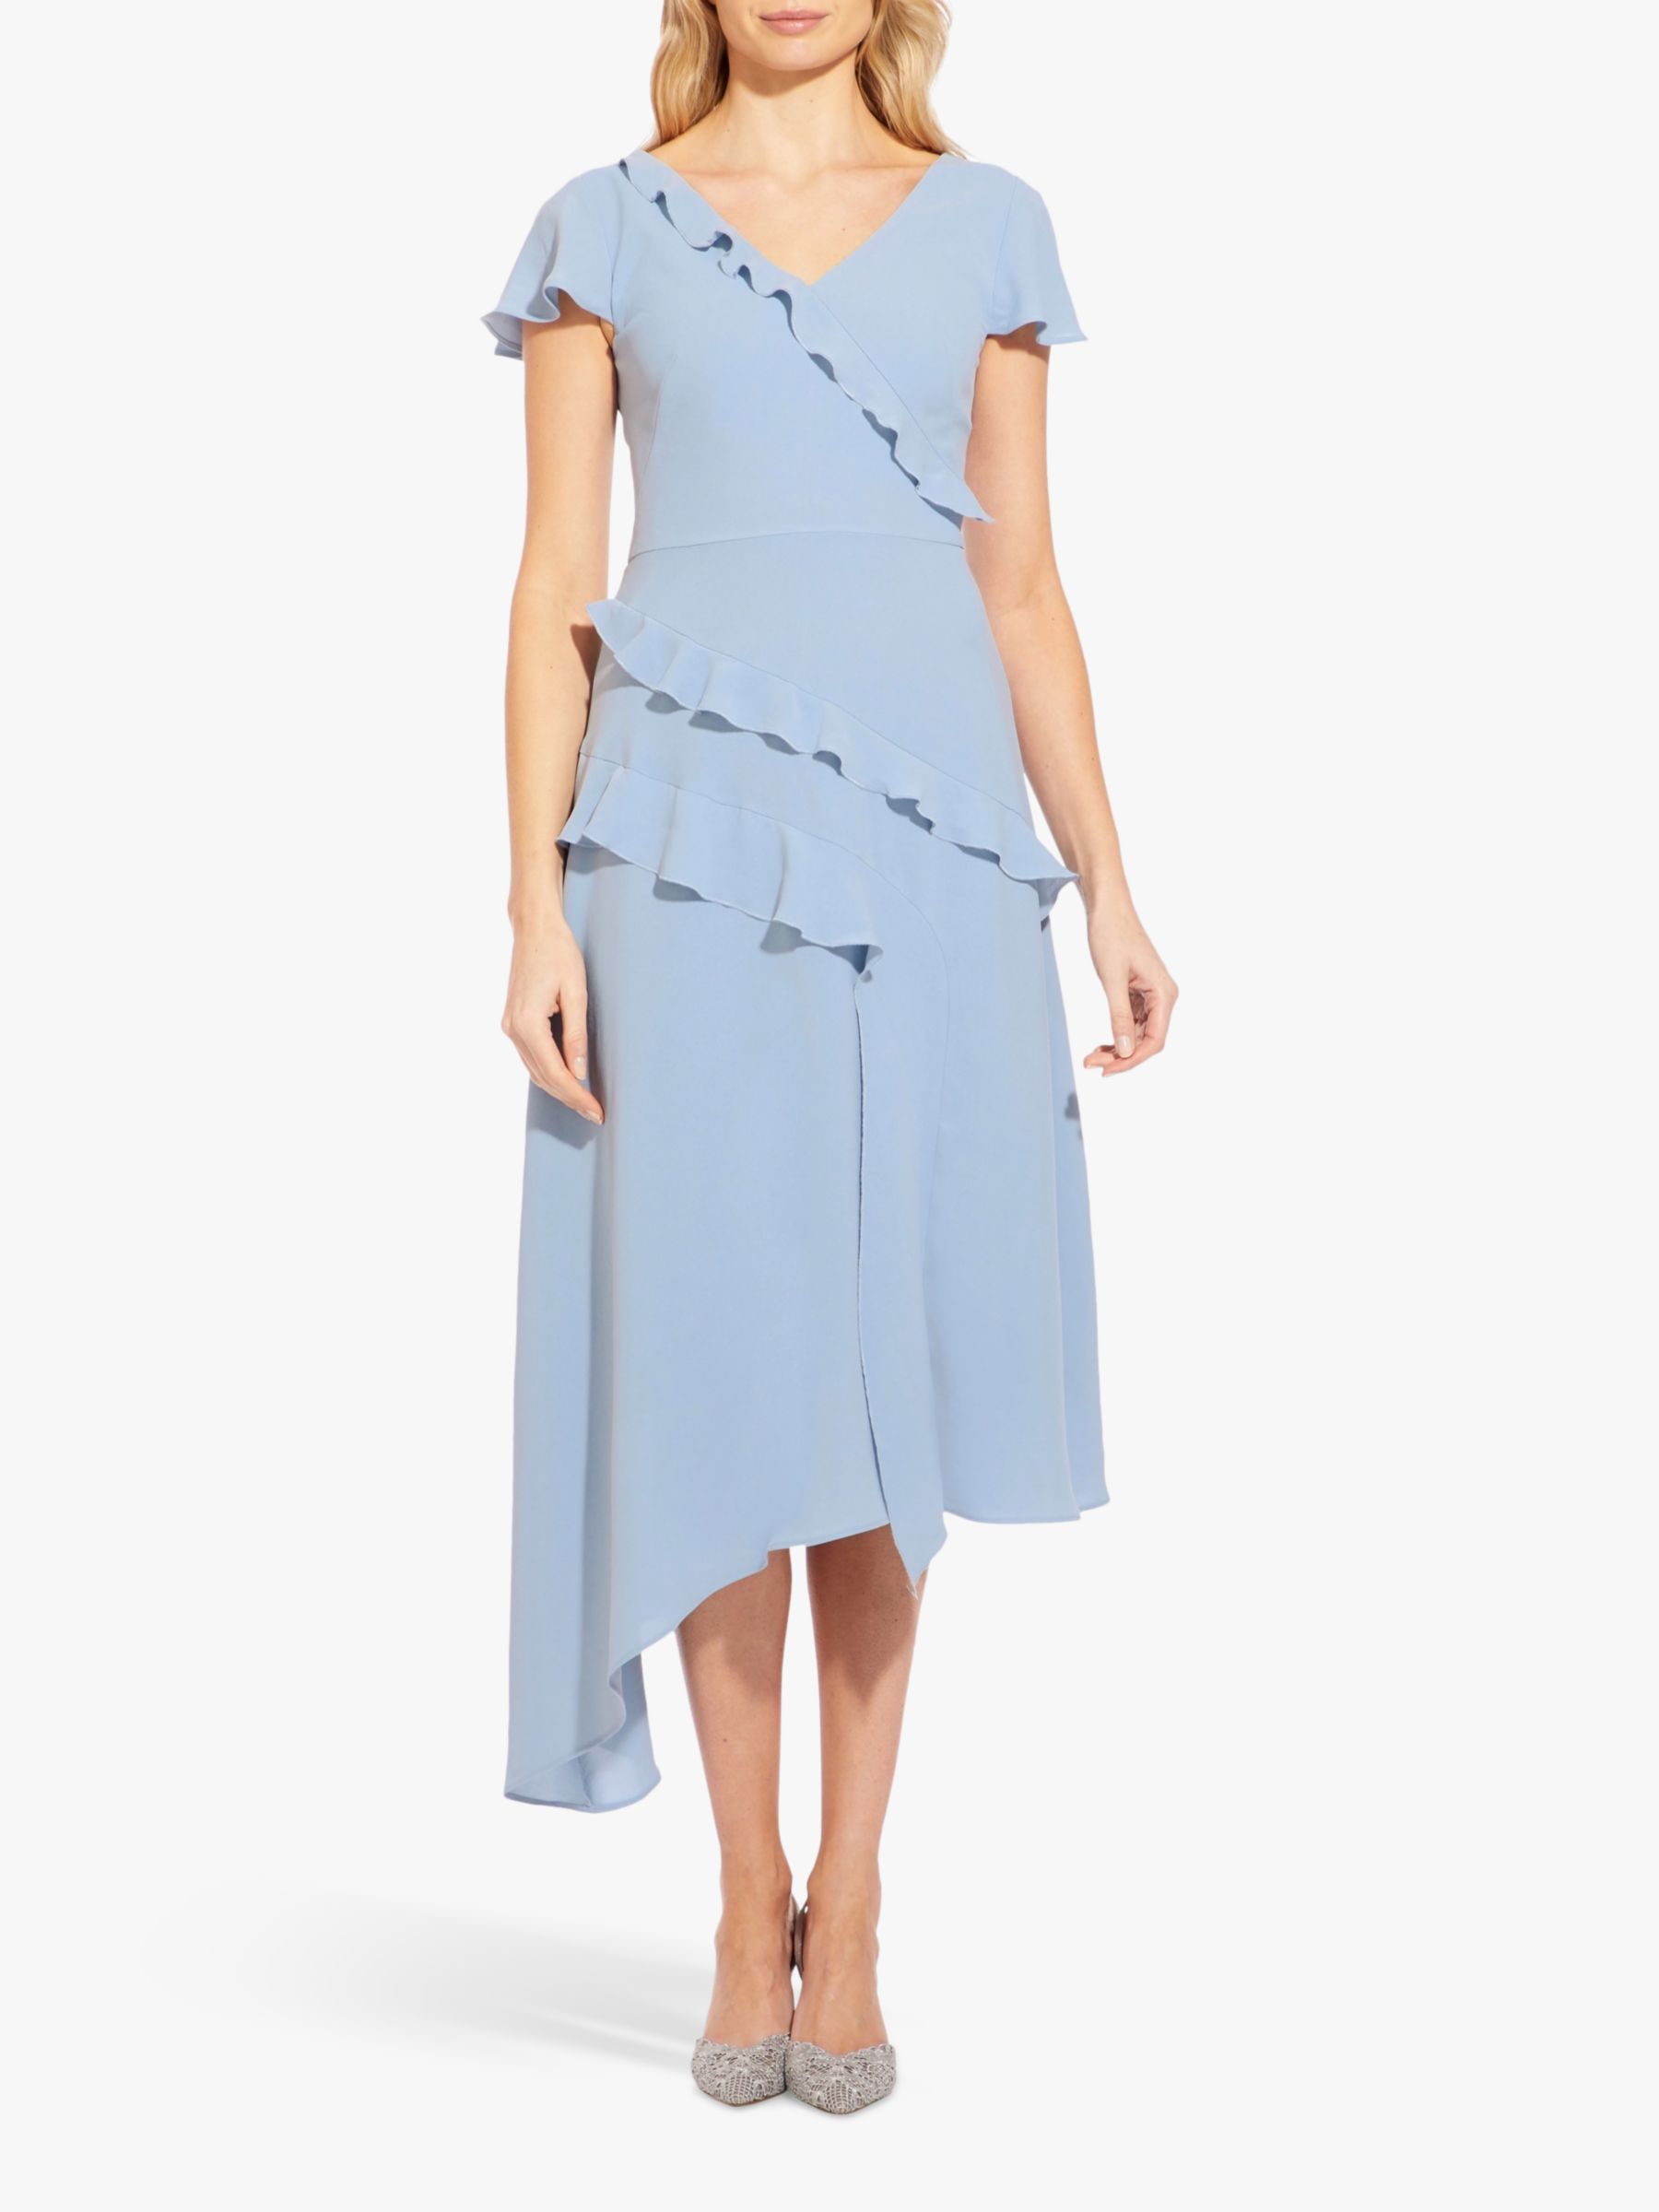 Adrianna Papell Gauzy Crepe Frill Detail Dress, Blue Mist